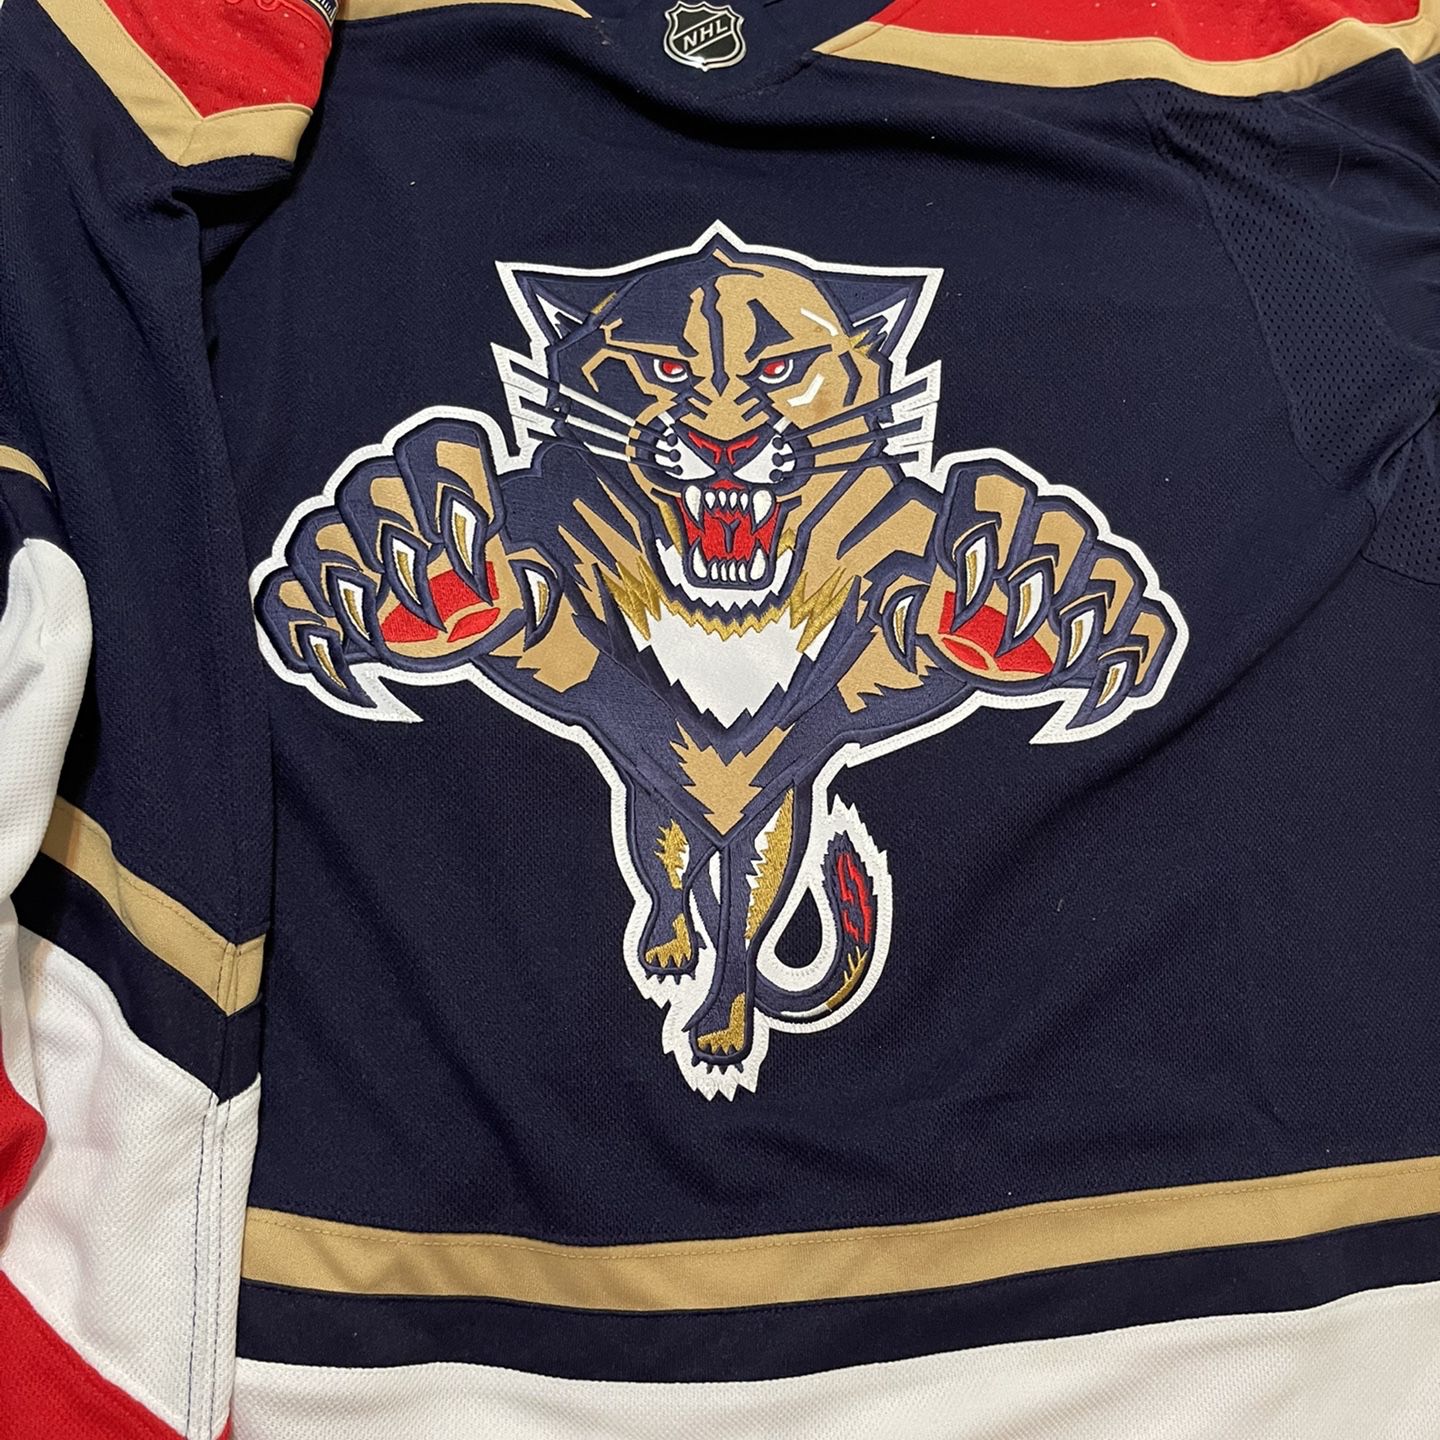 Florida Panthers, Adidas and NHL unveil new jerseys